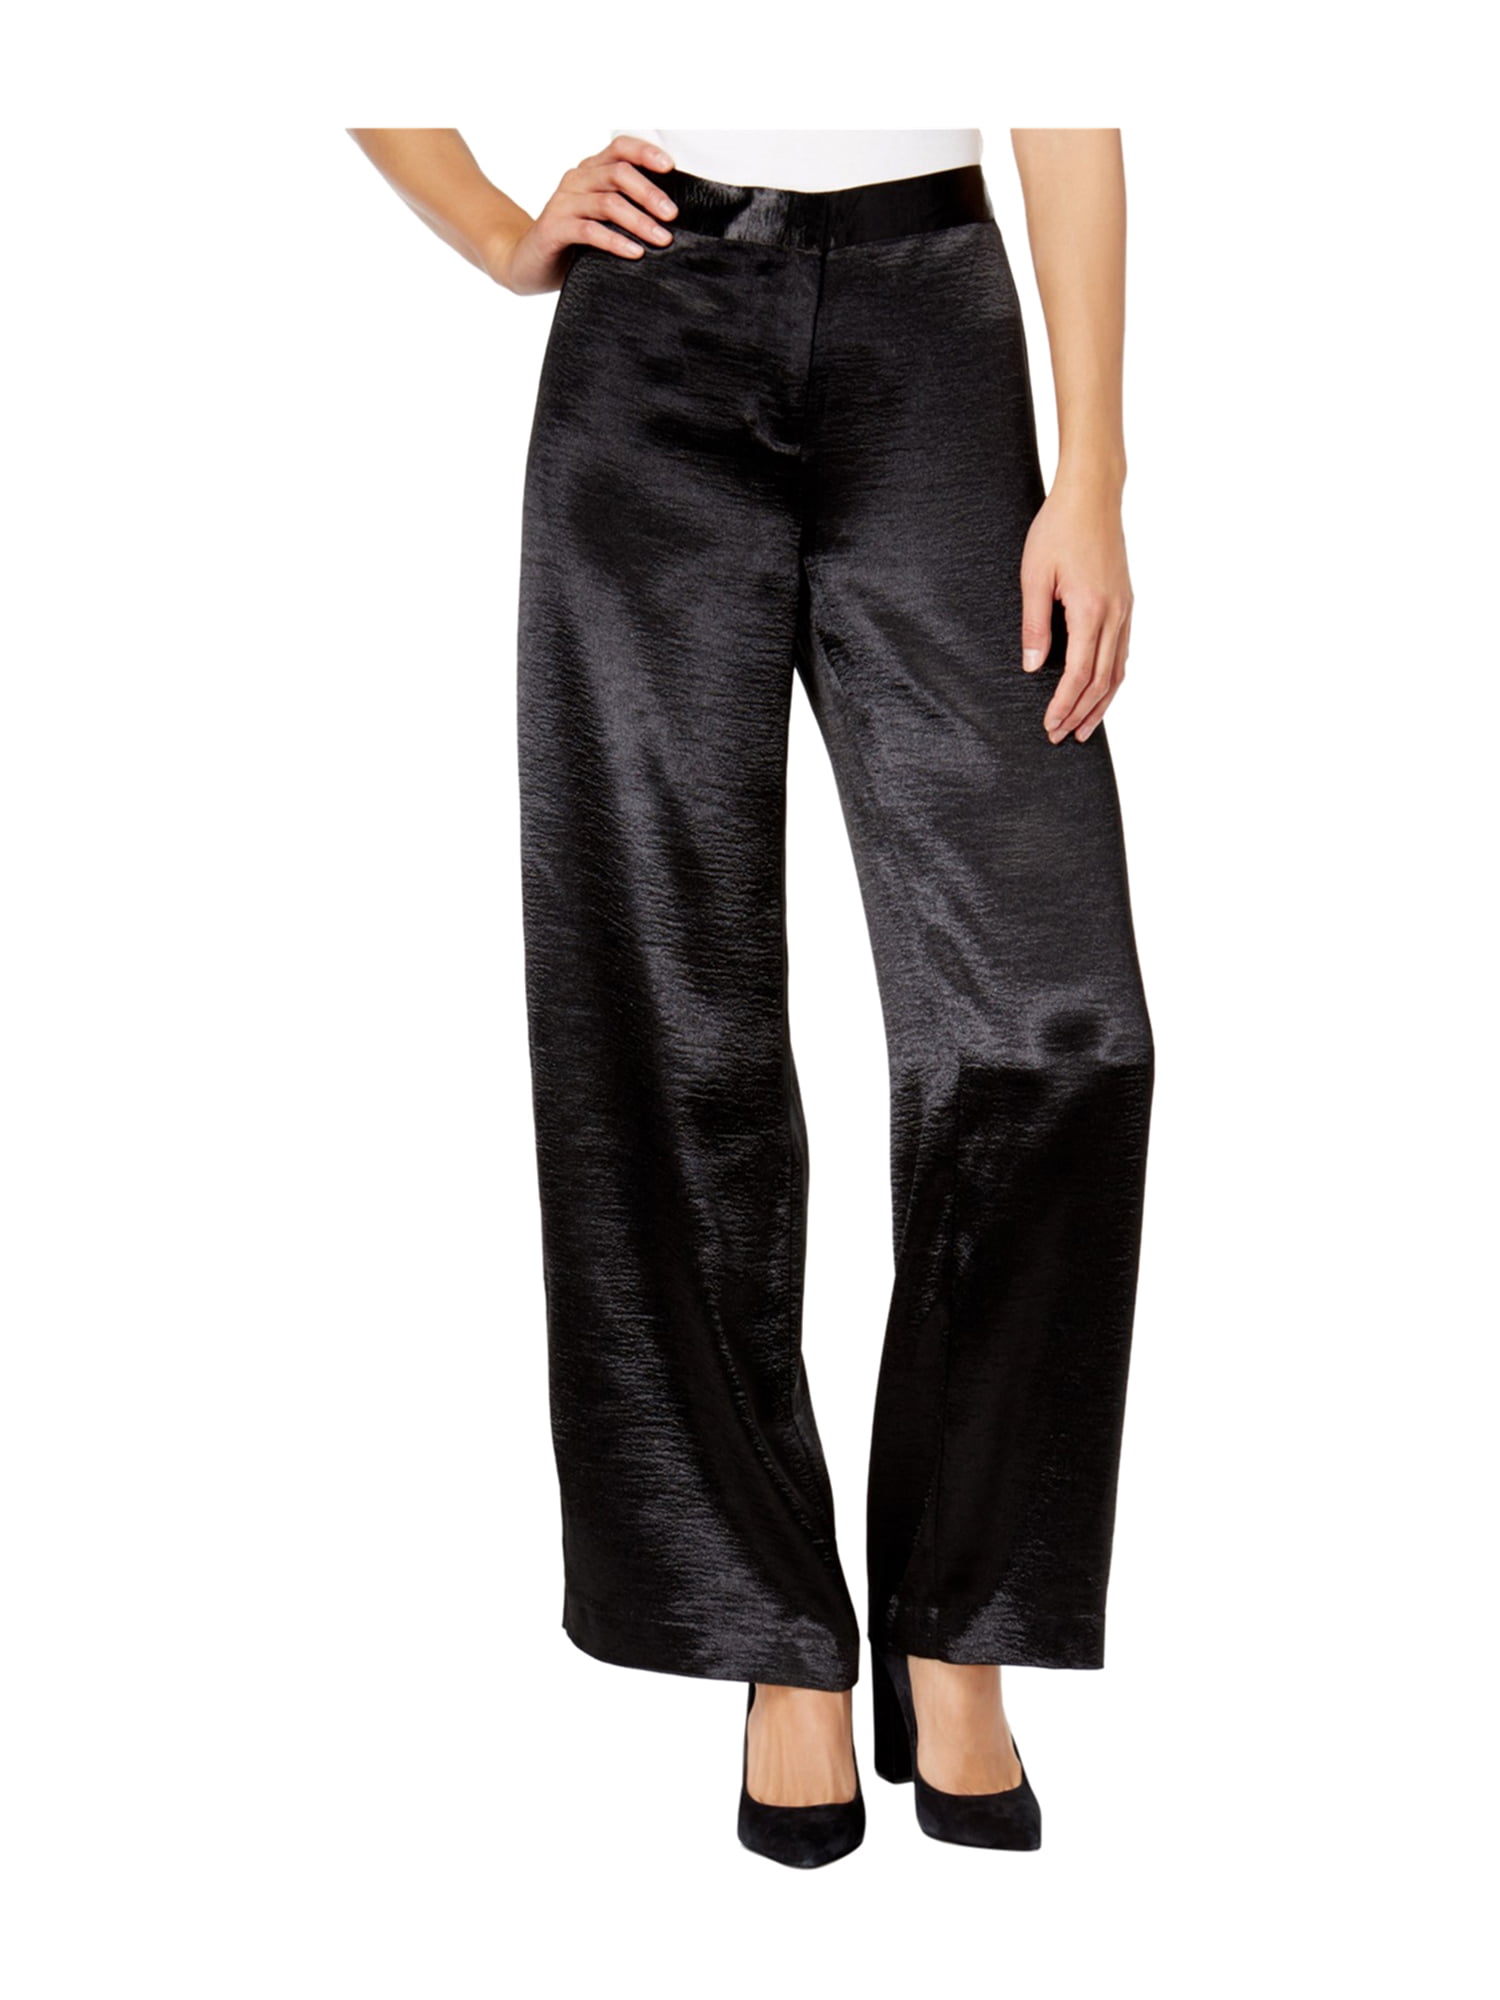 Kensie Womens Satin Casual Wide Leg Pants blk M/33 | Walmart Canada